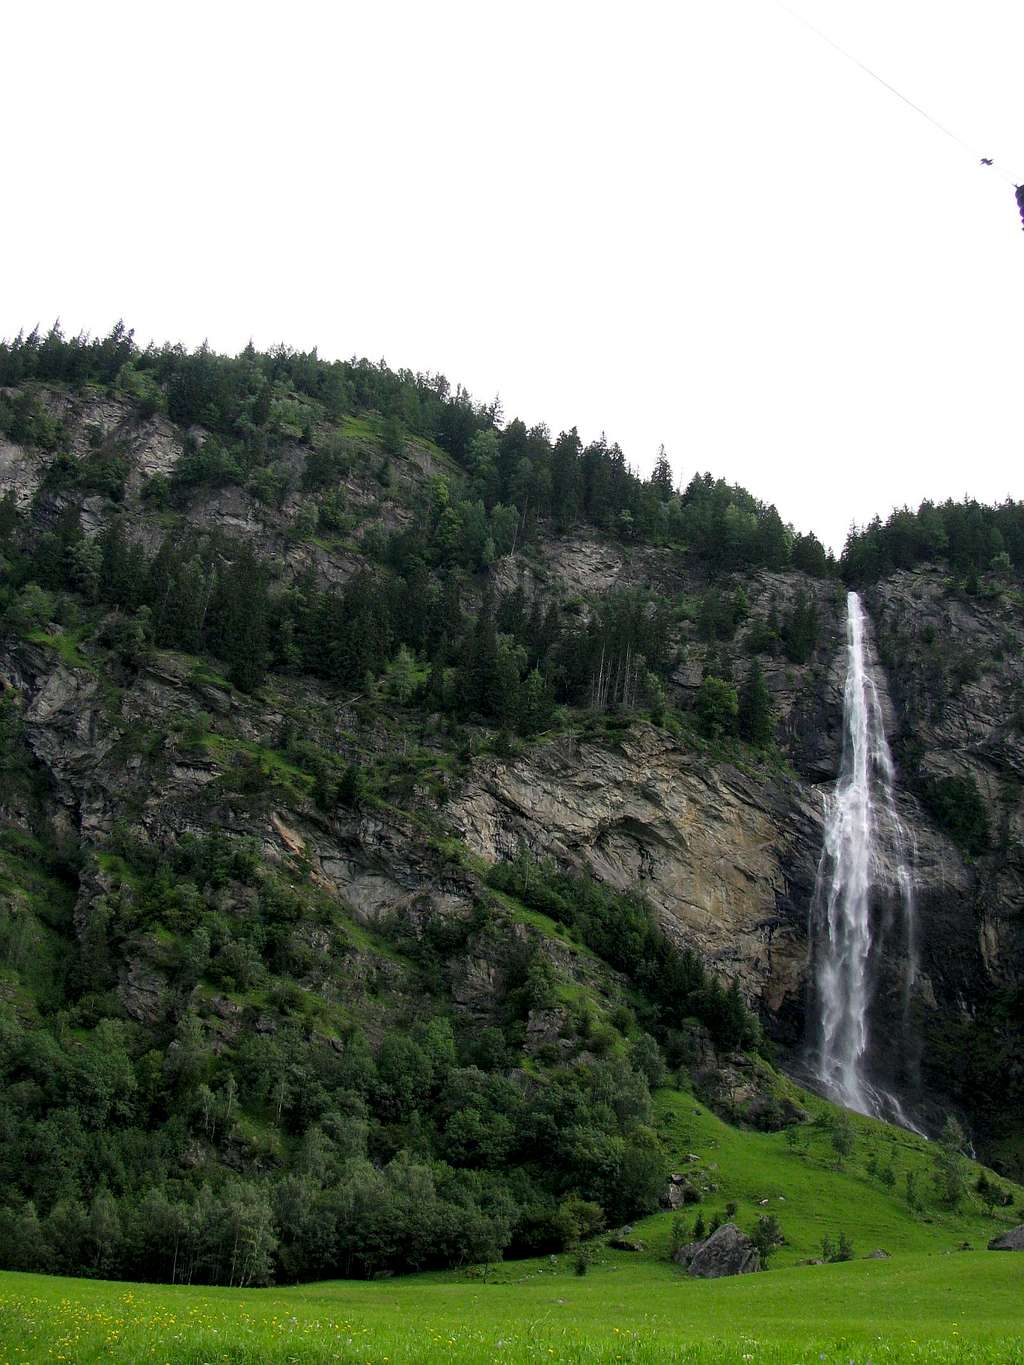 Highest waterfall in Karnten